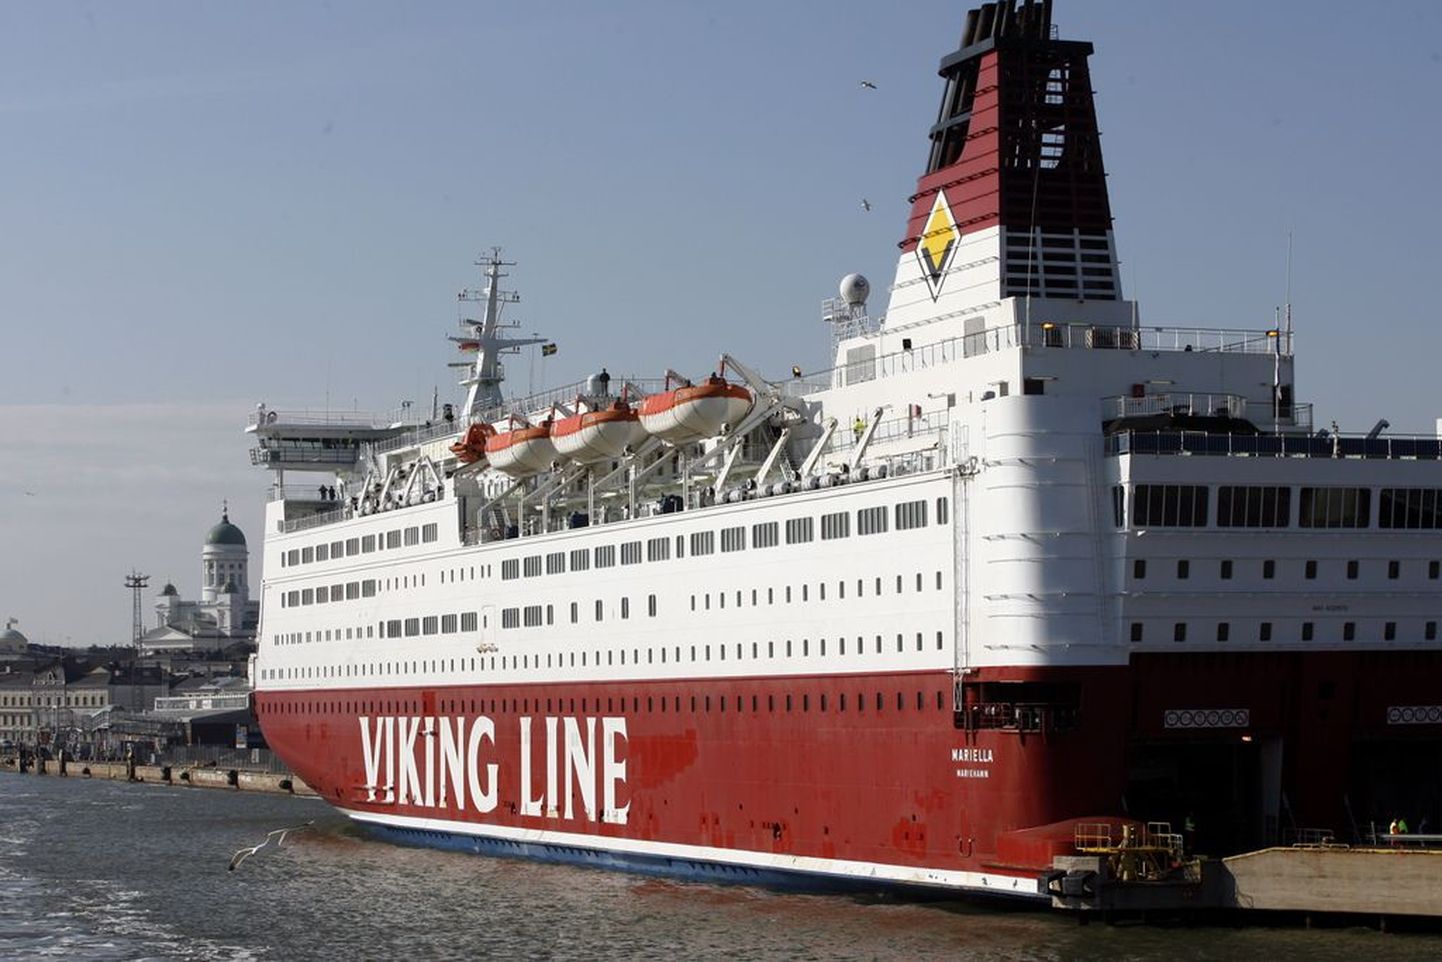 Viking Line'i Mariella Helsingi sadamas..